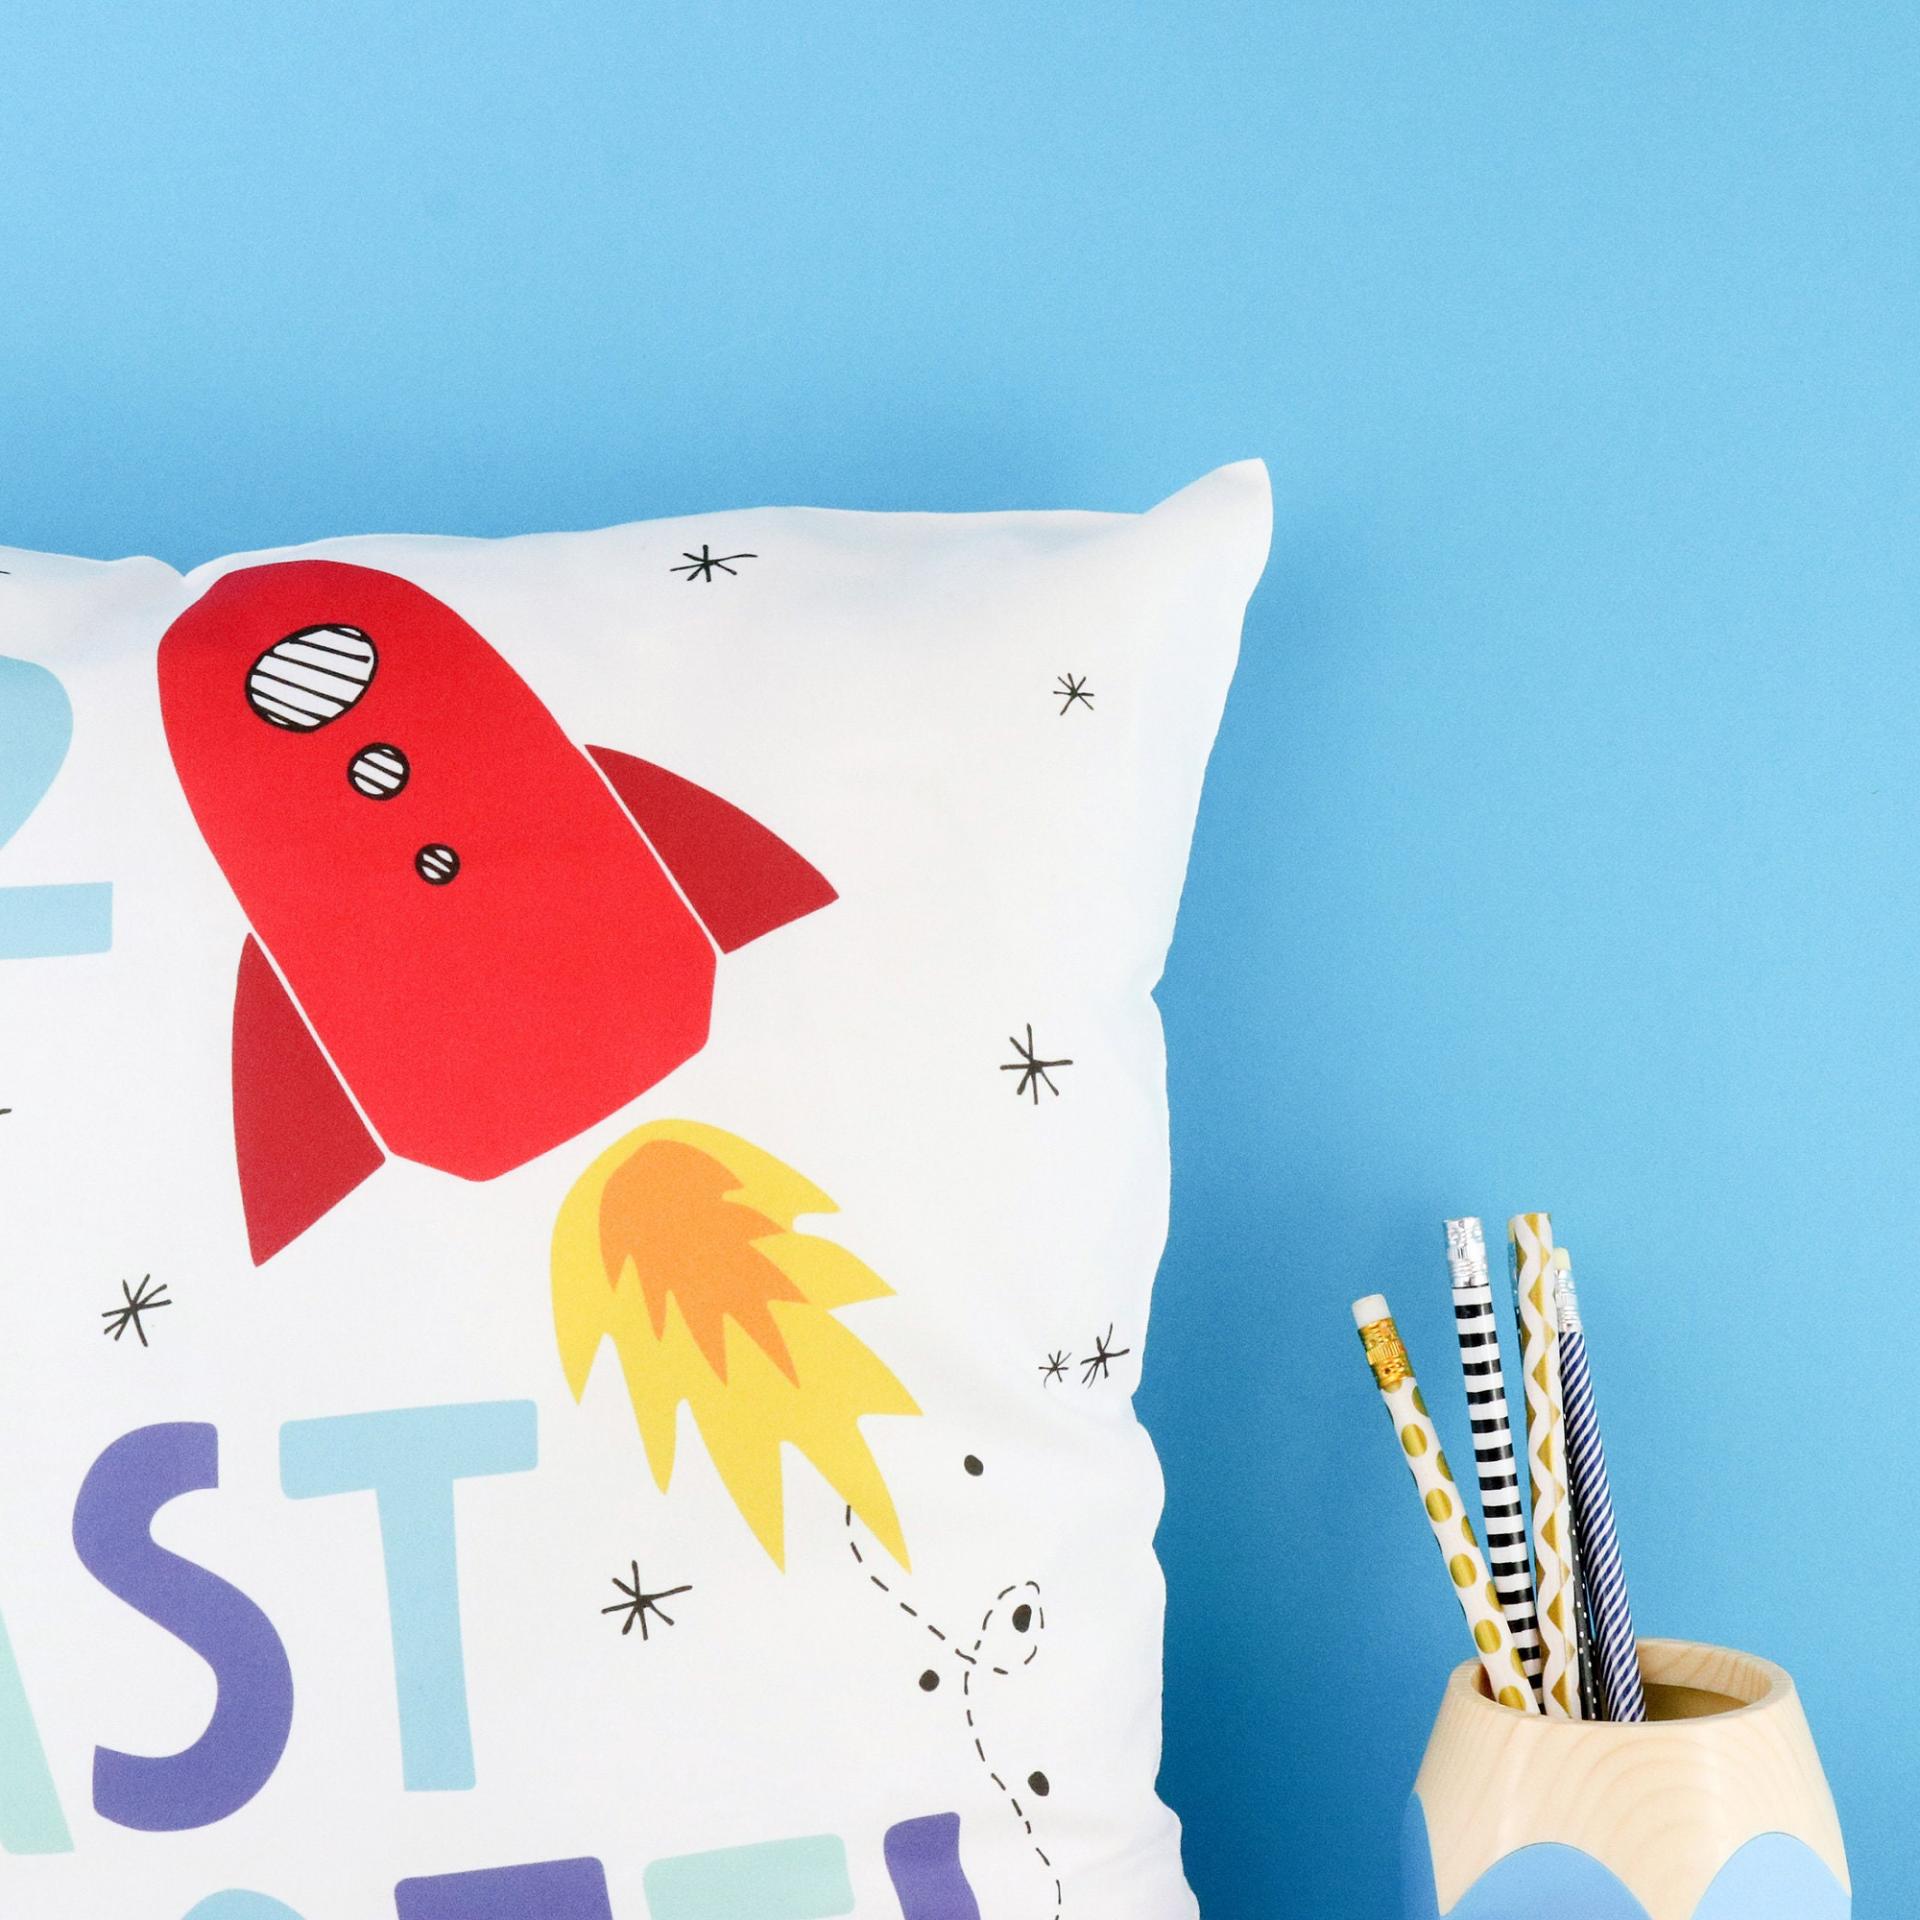 Rocket Pillow, Rocket Cushion Cover, Space Cushion, Space Nursery, Rocket kids cushion, Space theme Nursery Cushion, Kids Room Decor